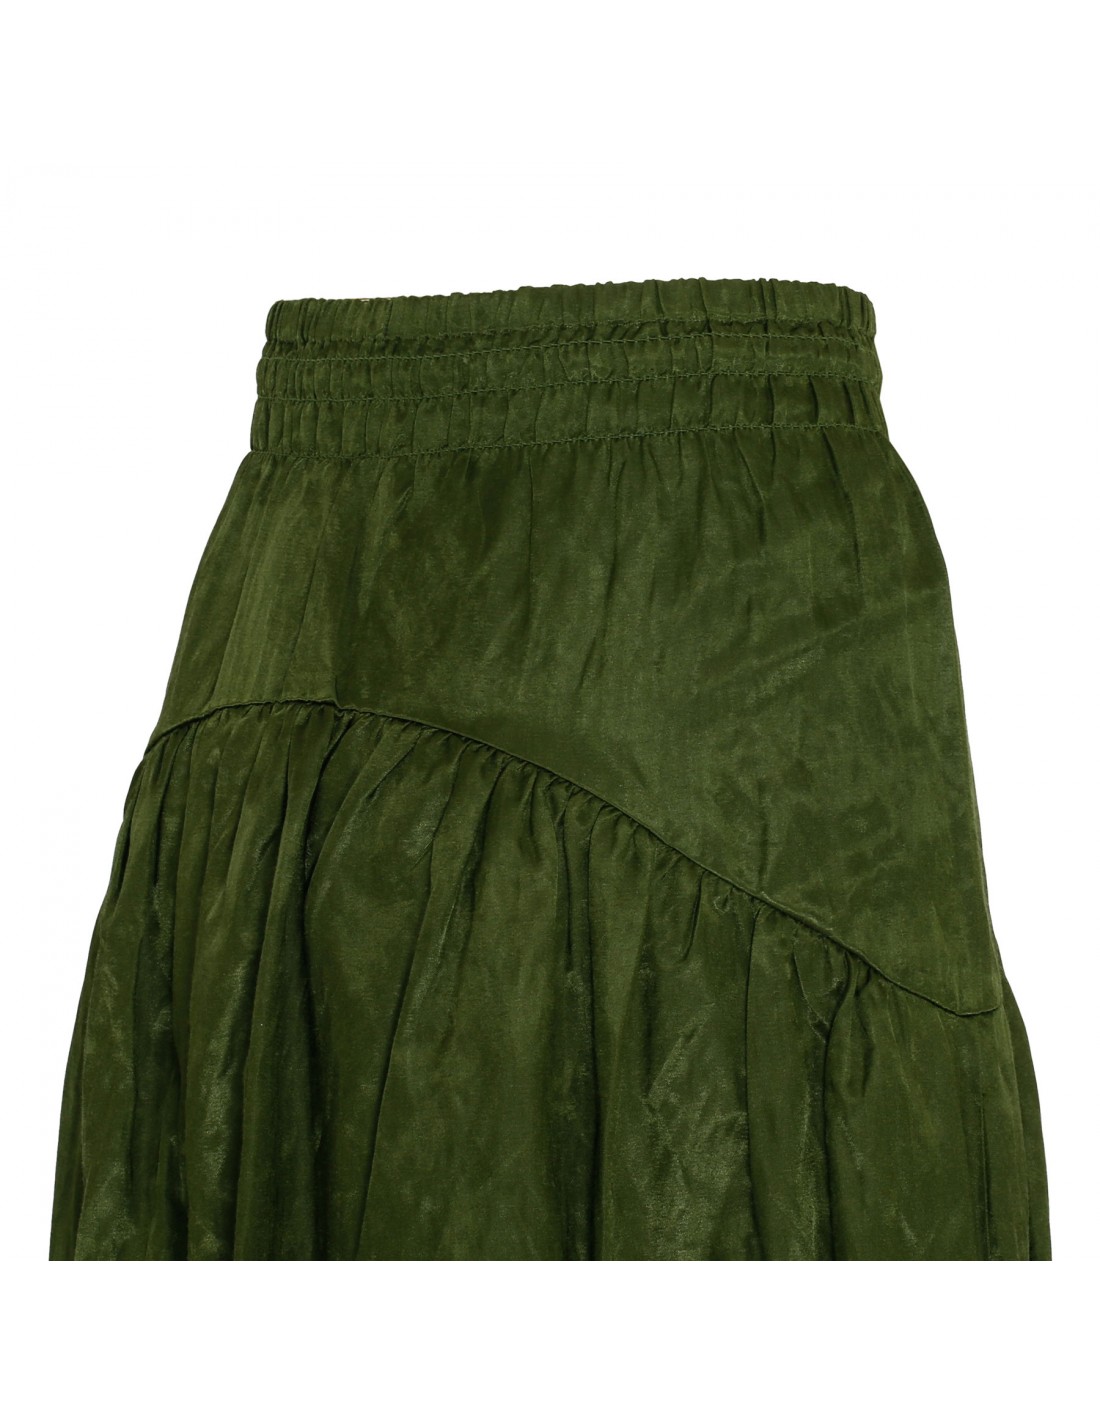 Smocked tiered skirt